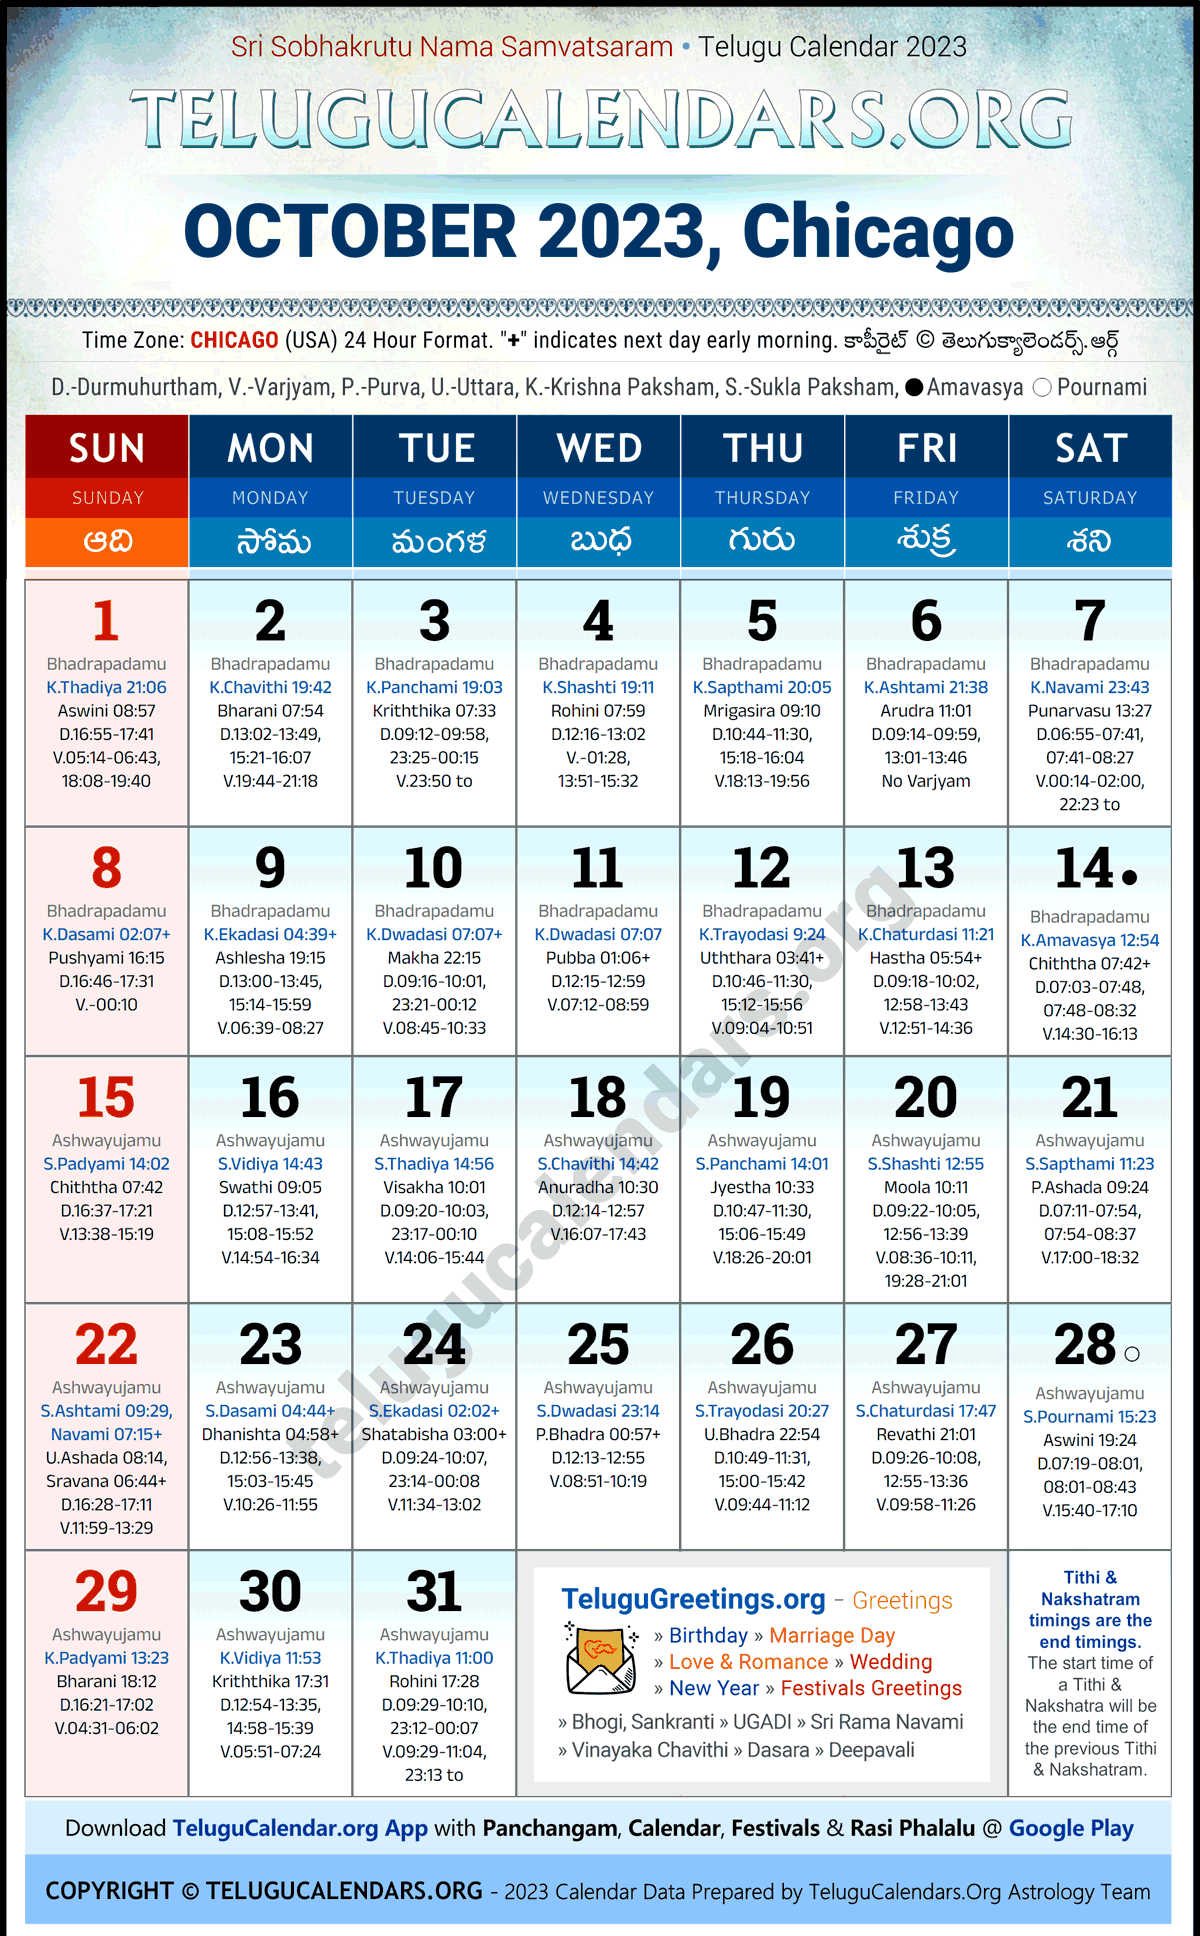 Telugu Calendar 2023 October Festivals for Chicago